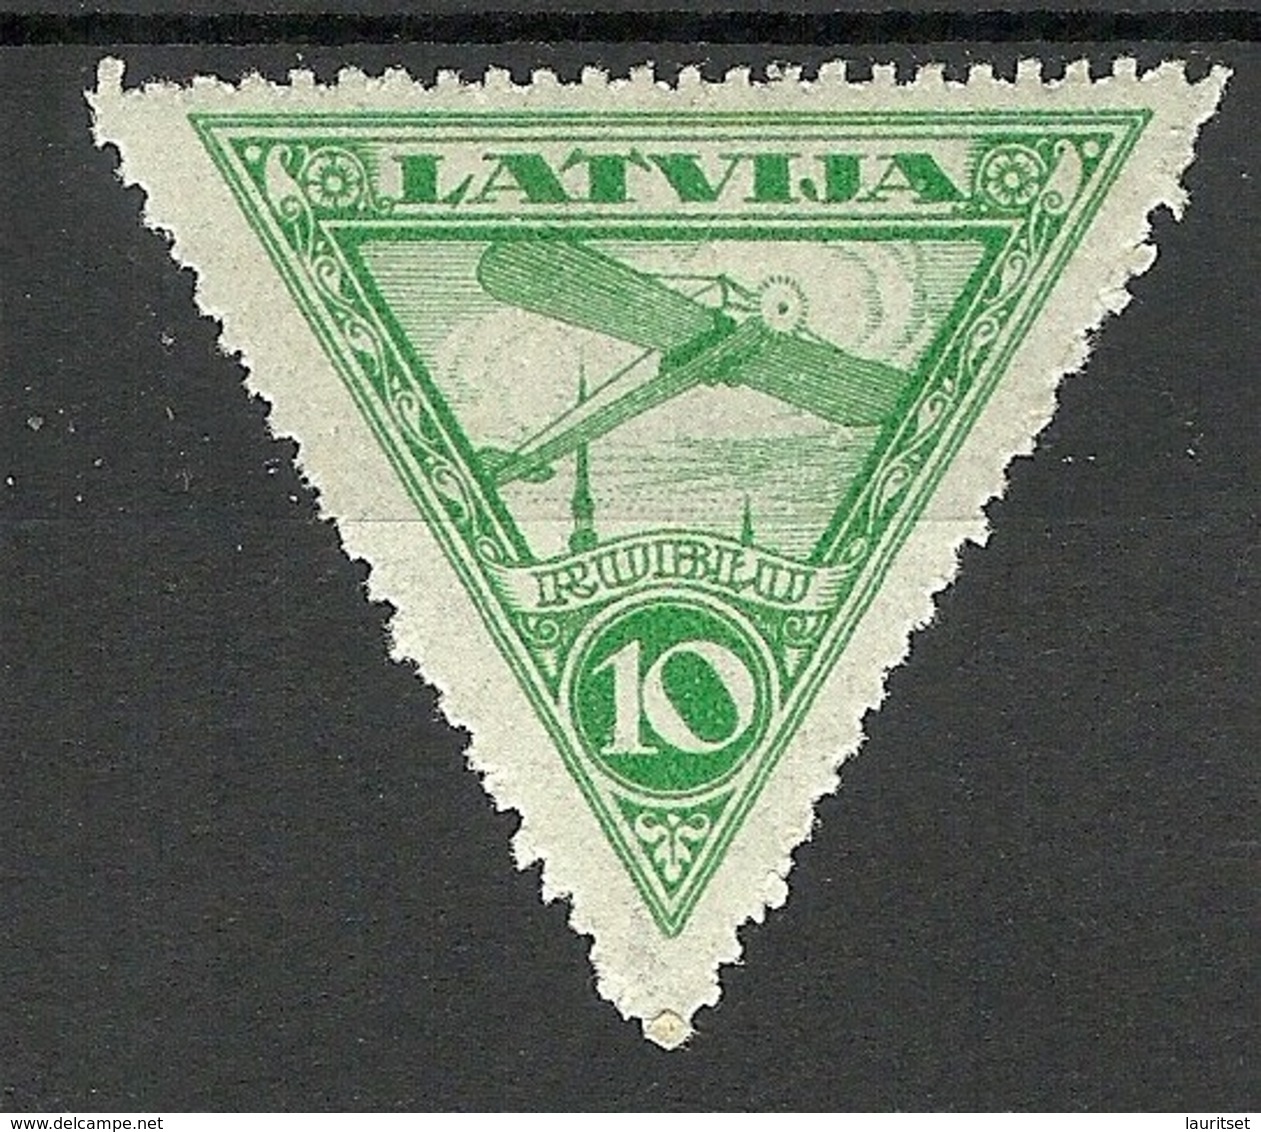 LETTLAND Latvia 1921 Michel 75 A * - Lettland